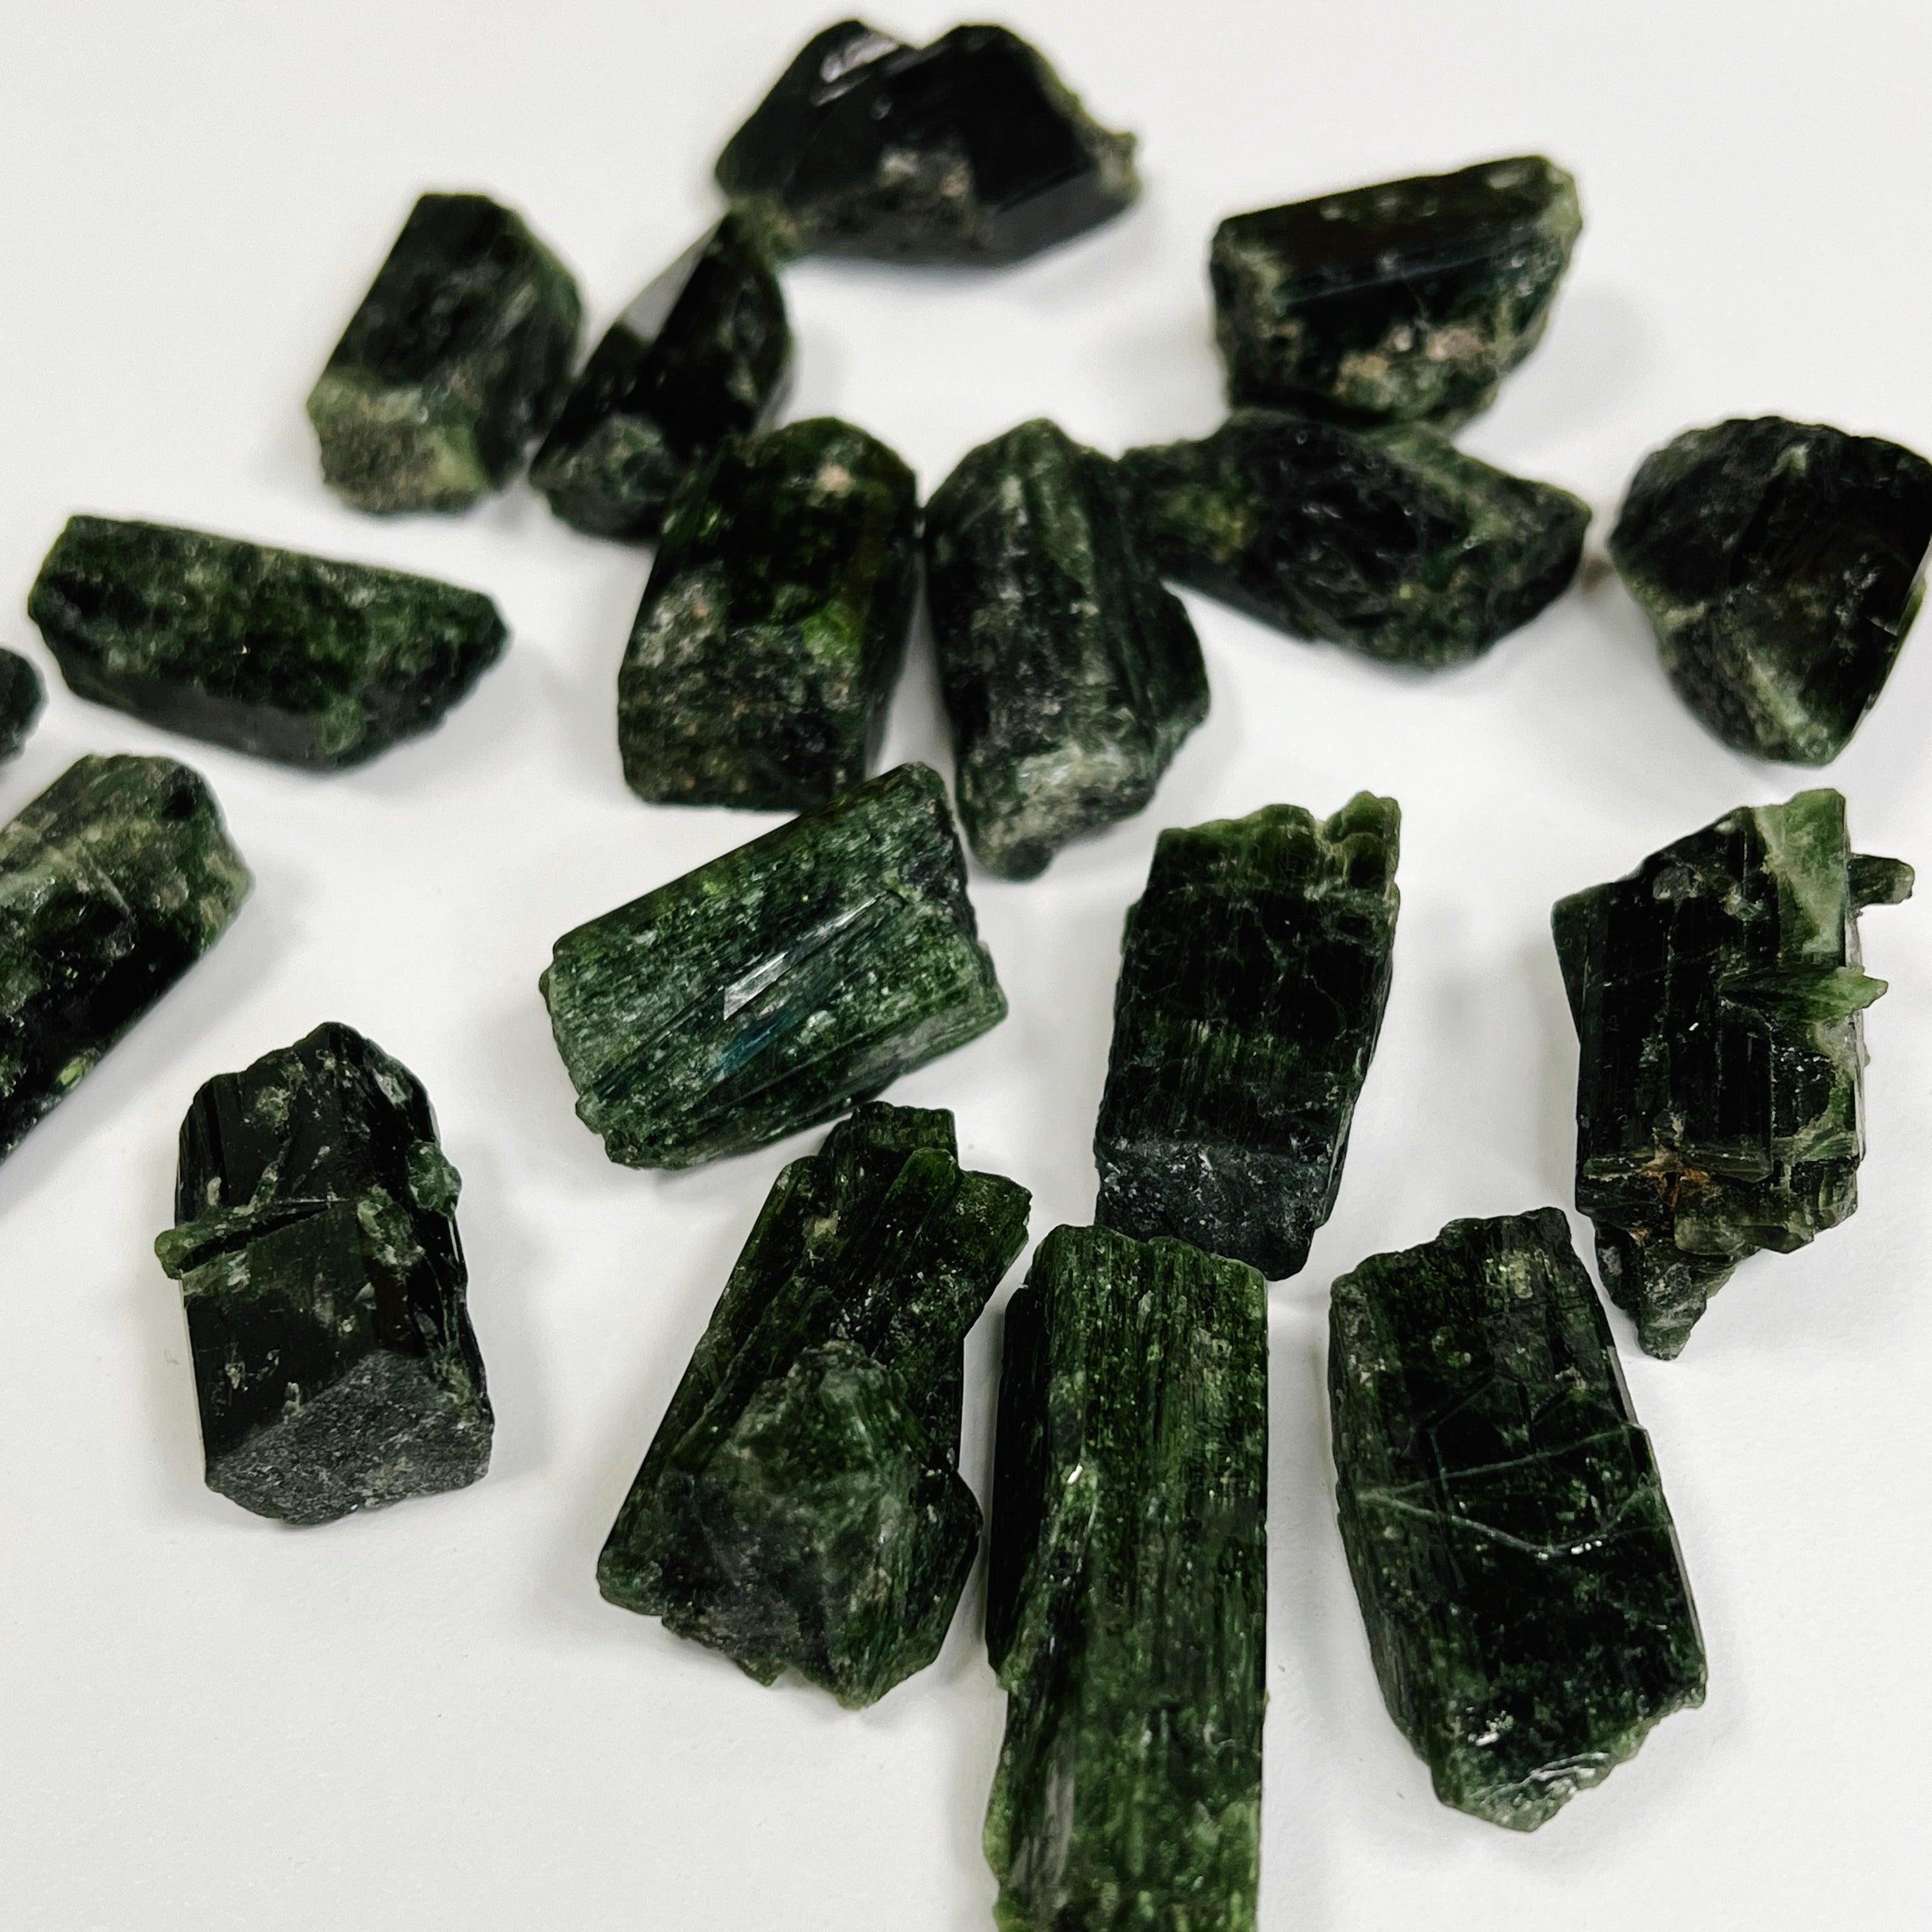 CHROME DIOPSIDE - chrome diopside, diopside, pocket crystal, pocket crystals, pocket stone, raw crystal, raw stone - The Mineral Maven